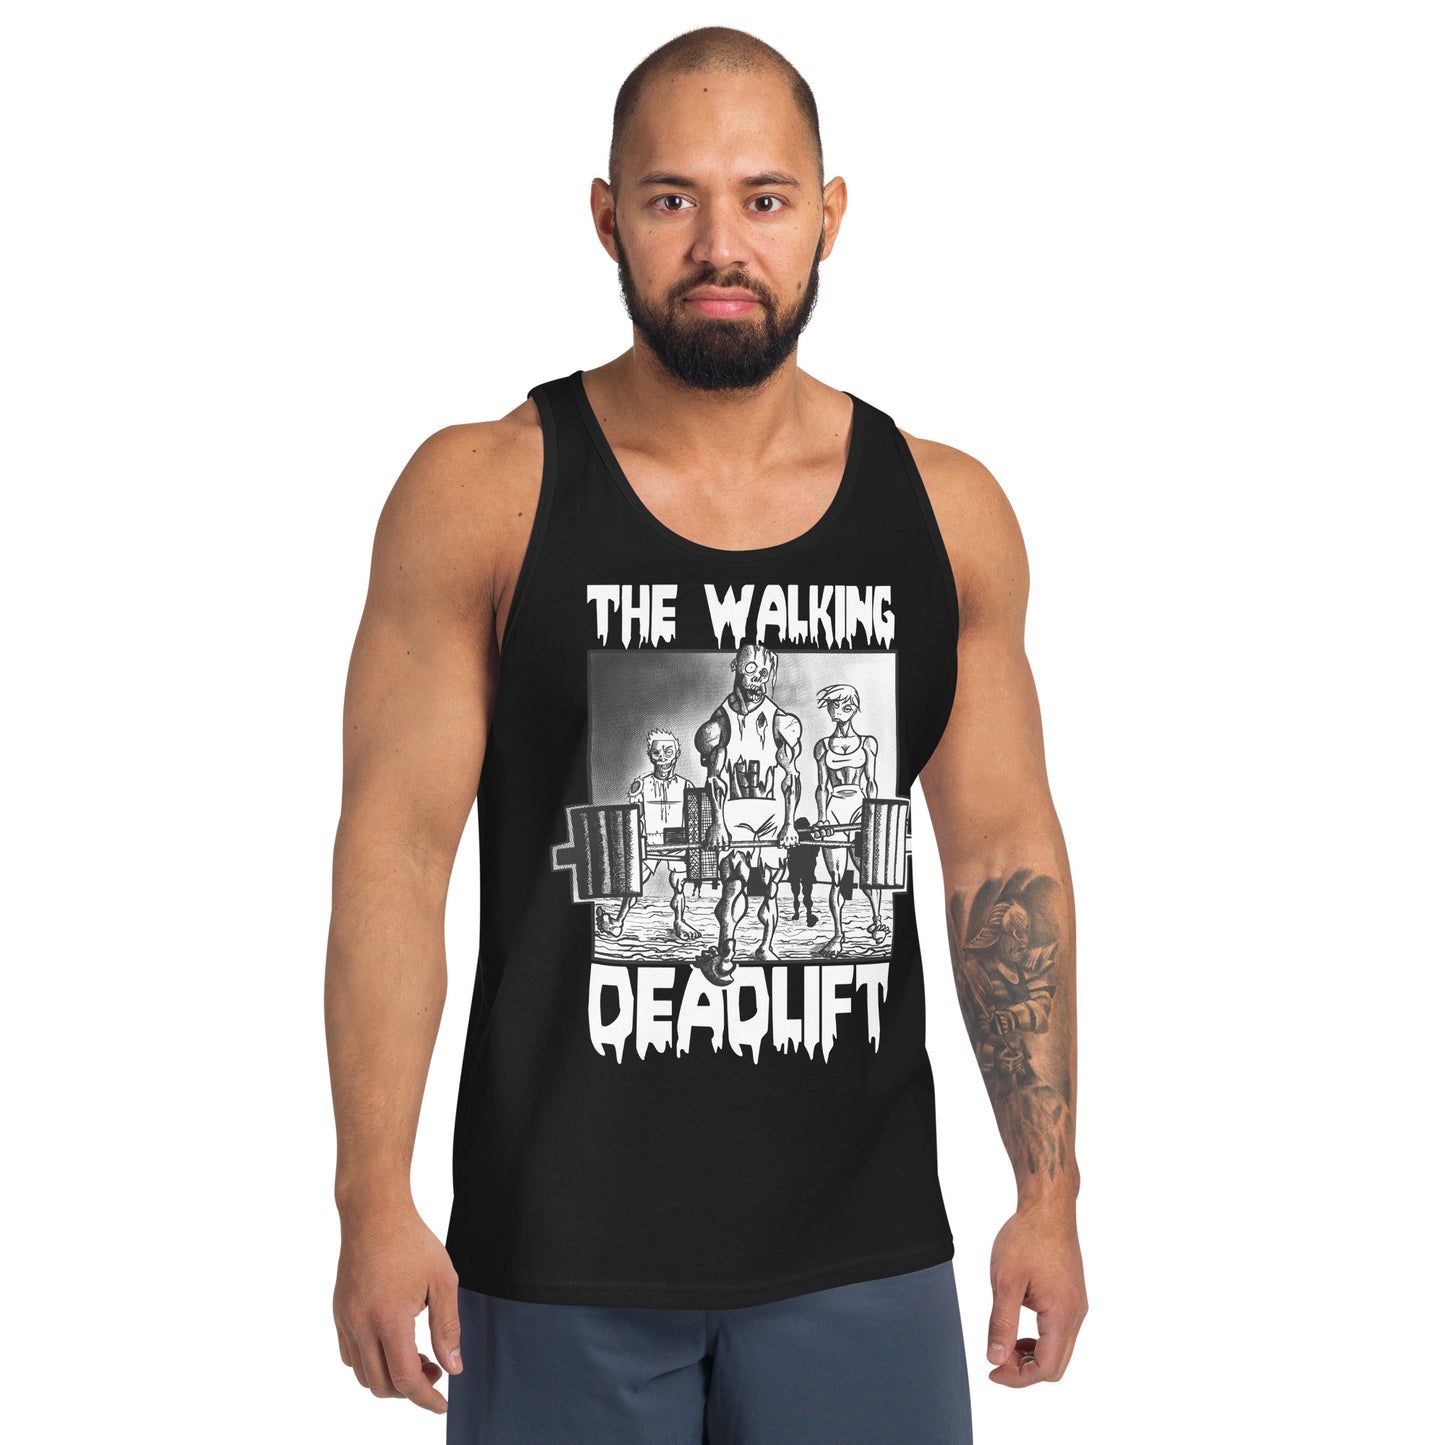 The Walking Deadlift Tank Top